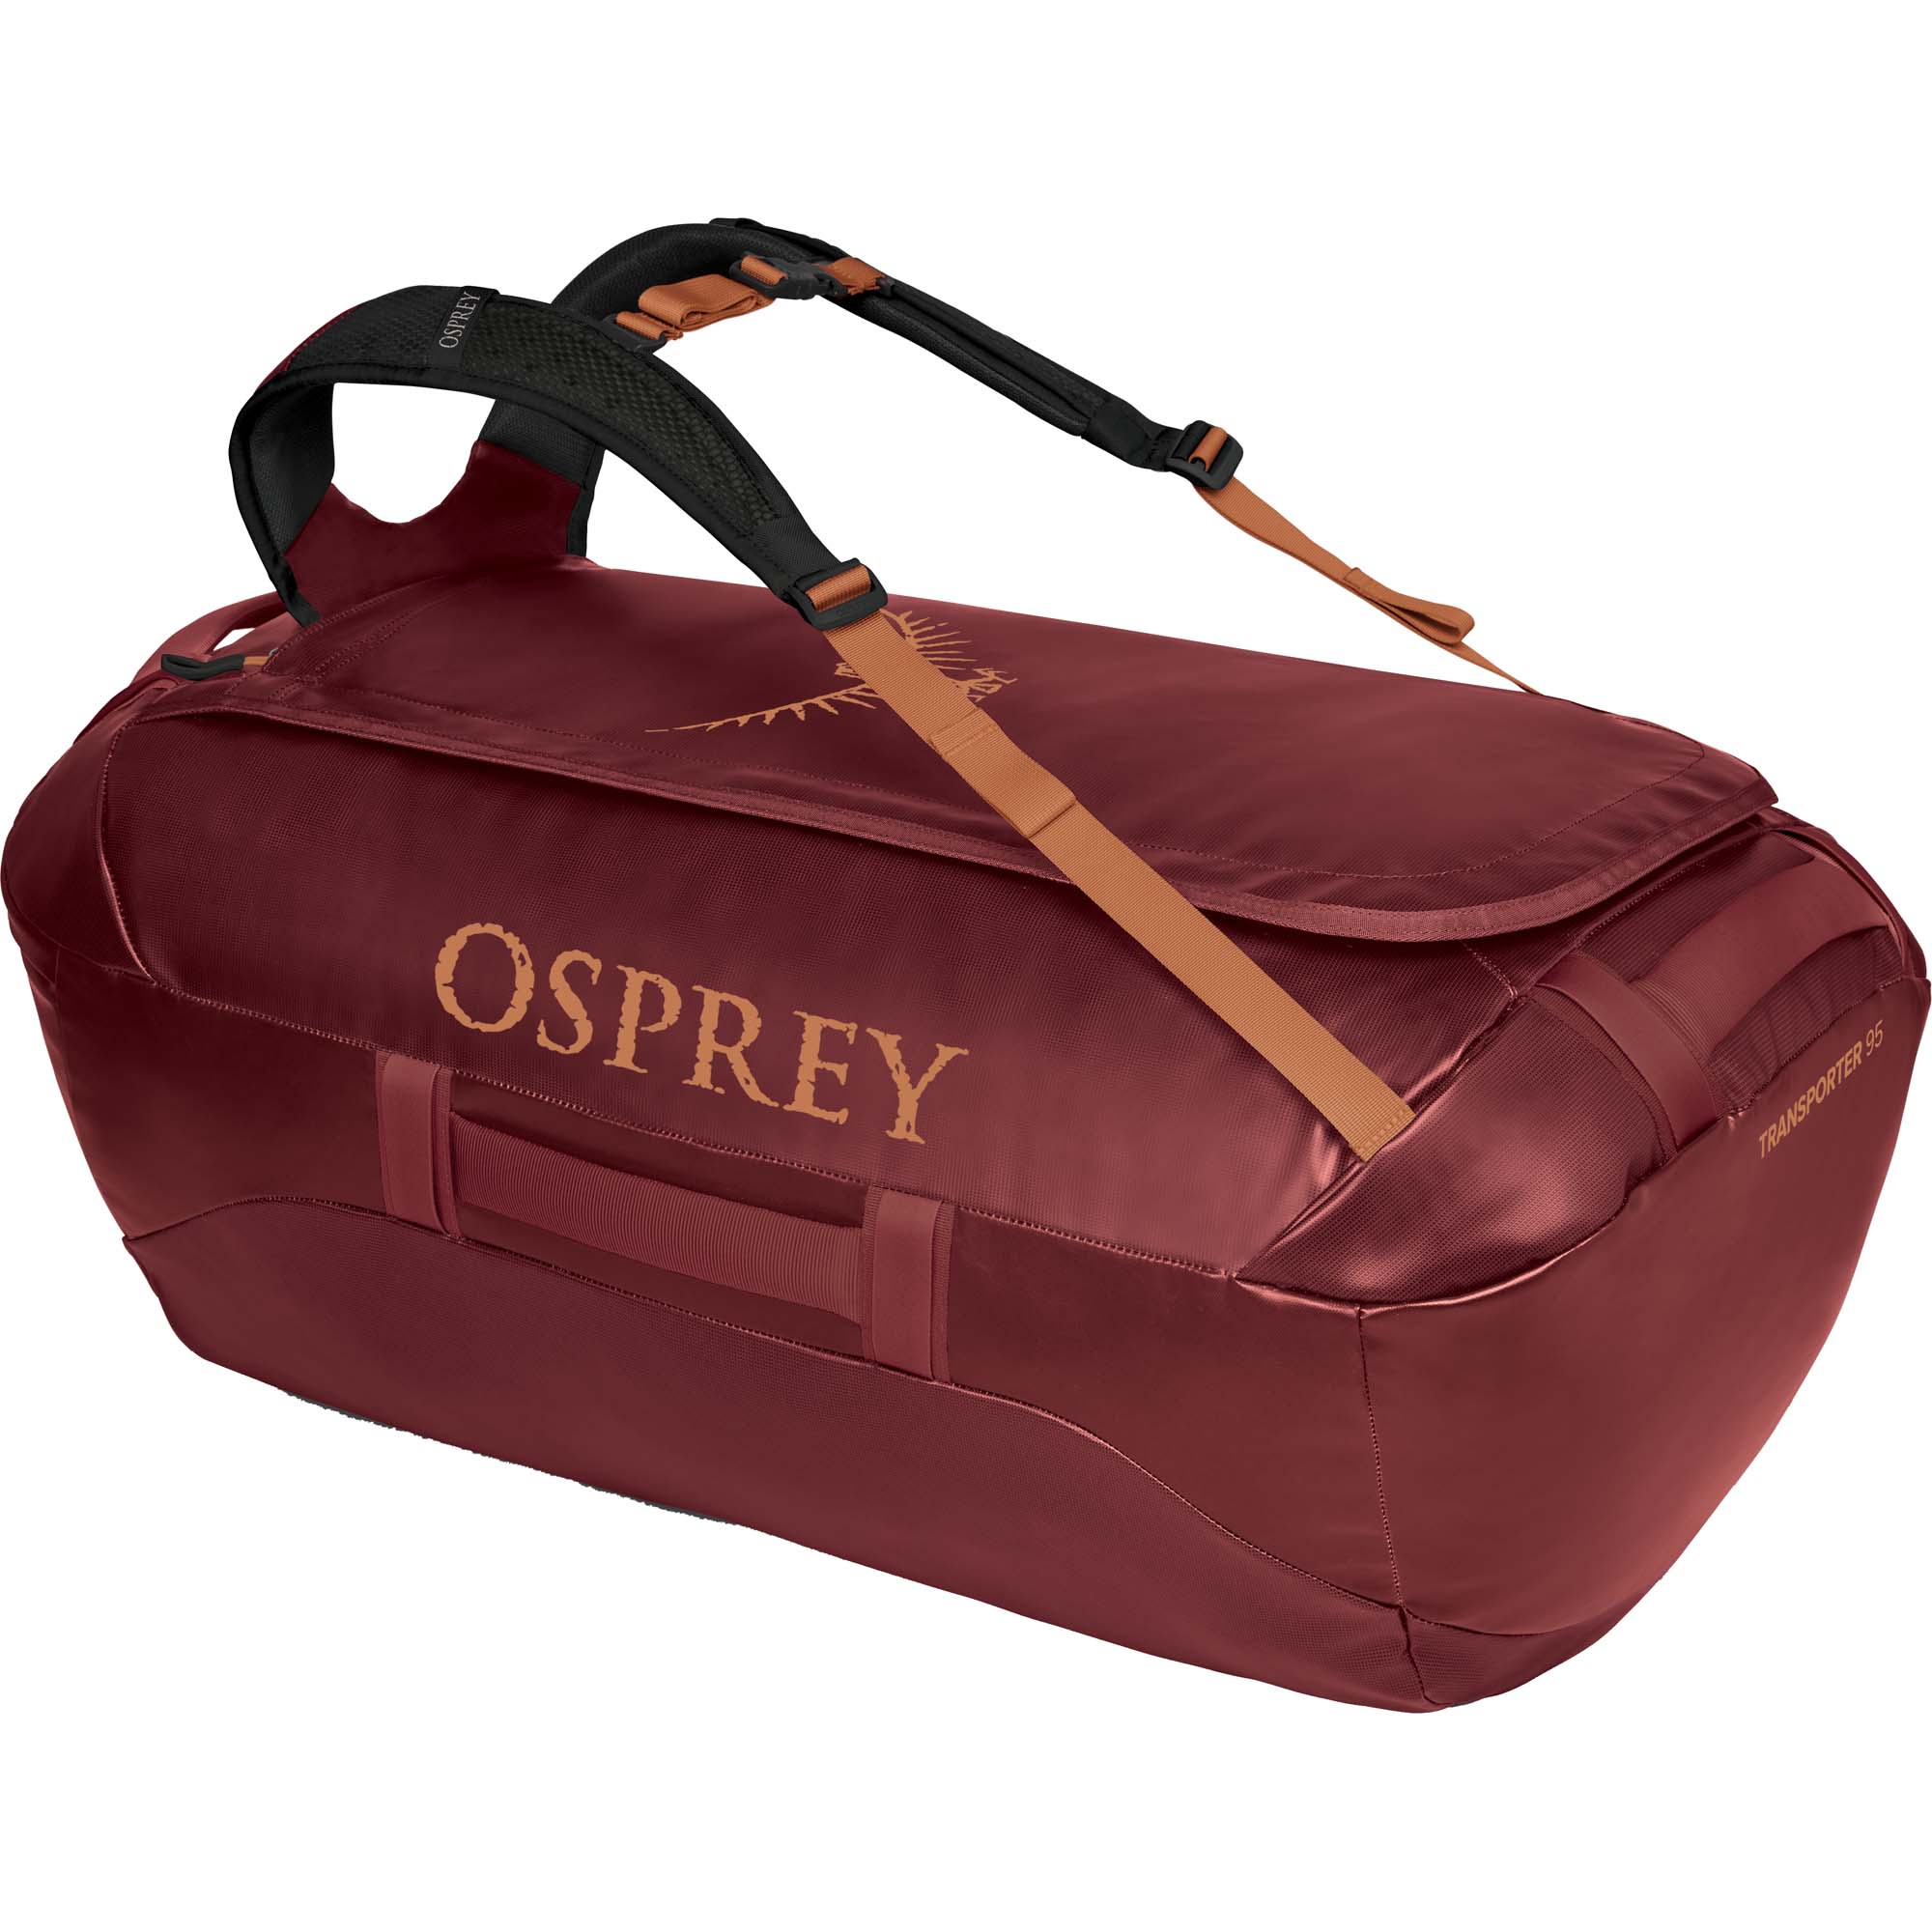 Osprey Transporter 95L Duffel Travel Bag